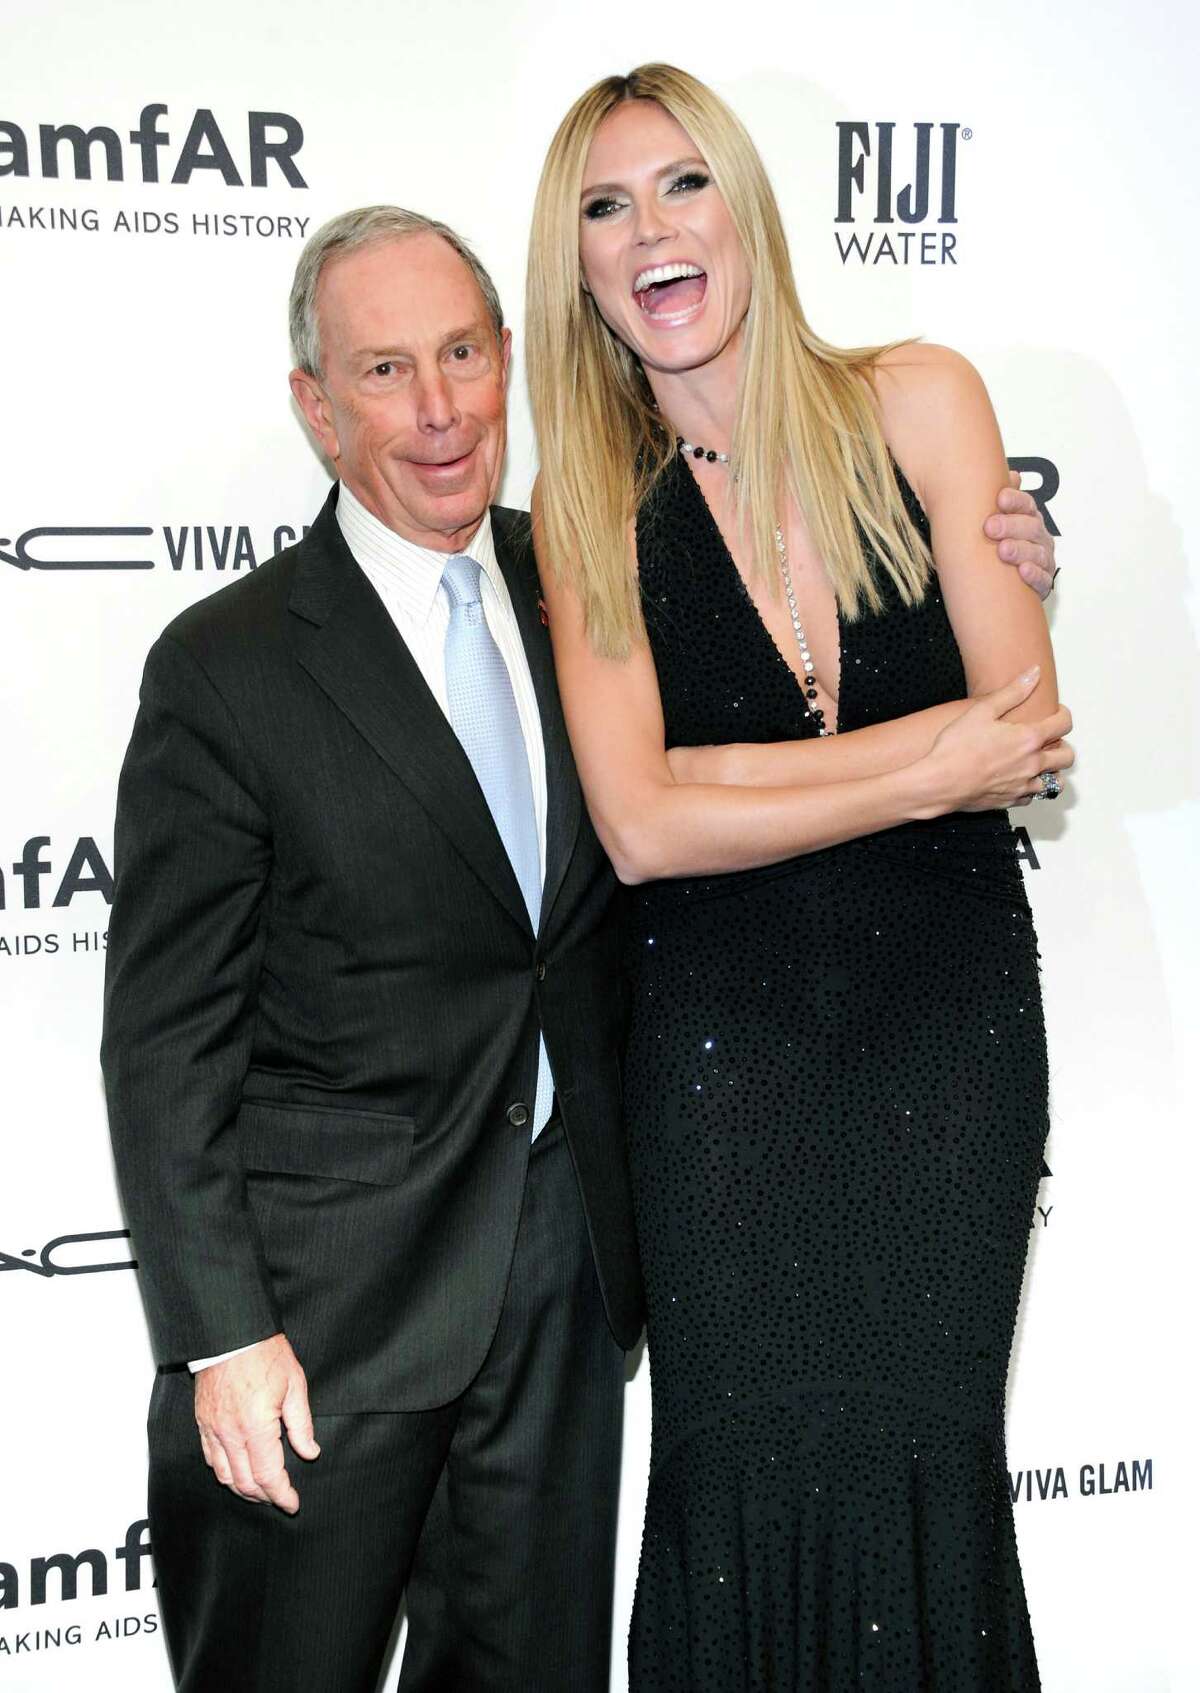 New York Mayor Michael Bloomberg and honoree Heidi Klum attend amfAR's New York gala at Cipriani Wall Street on Wednesday, Feb. 6, 2013 in New York.